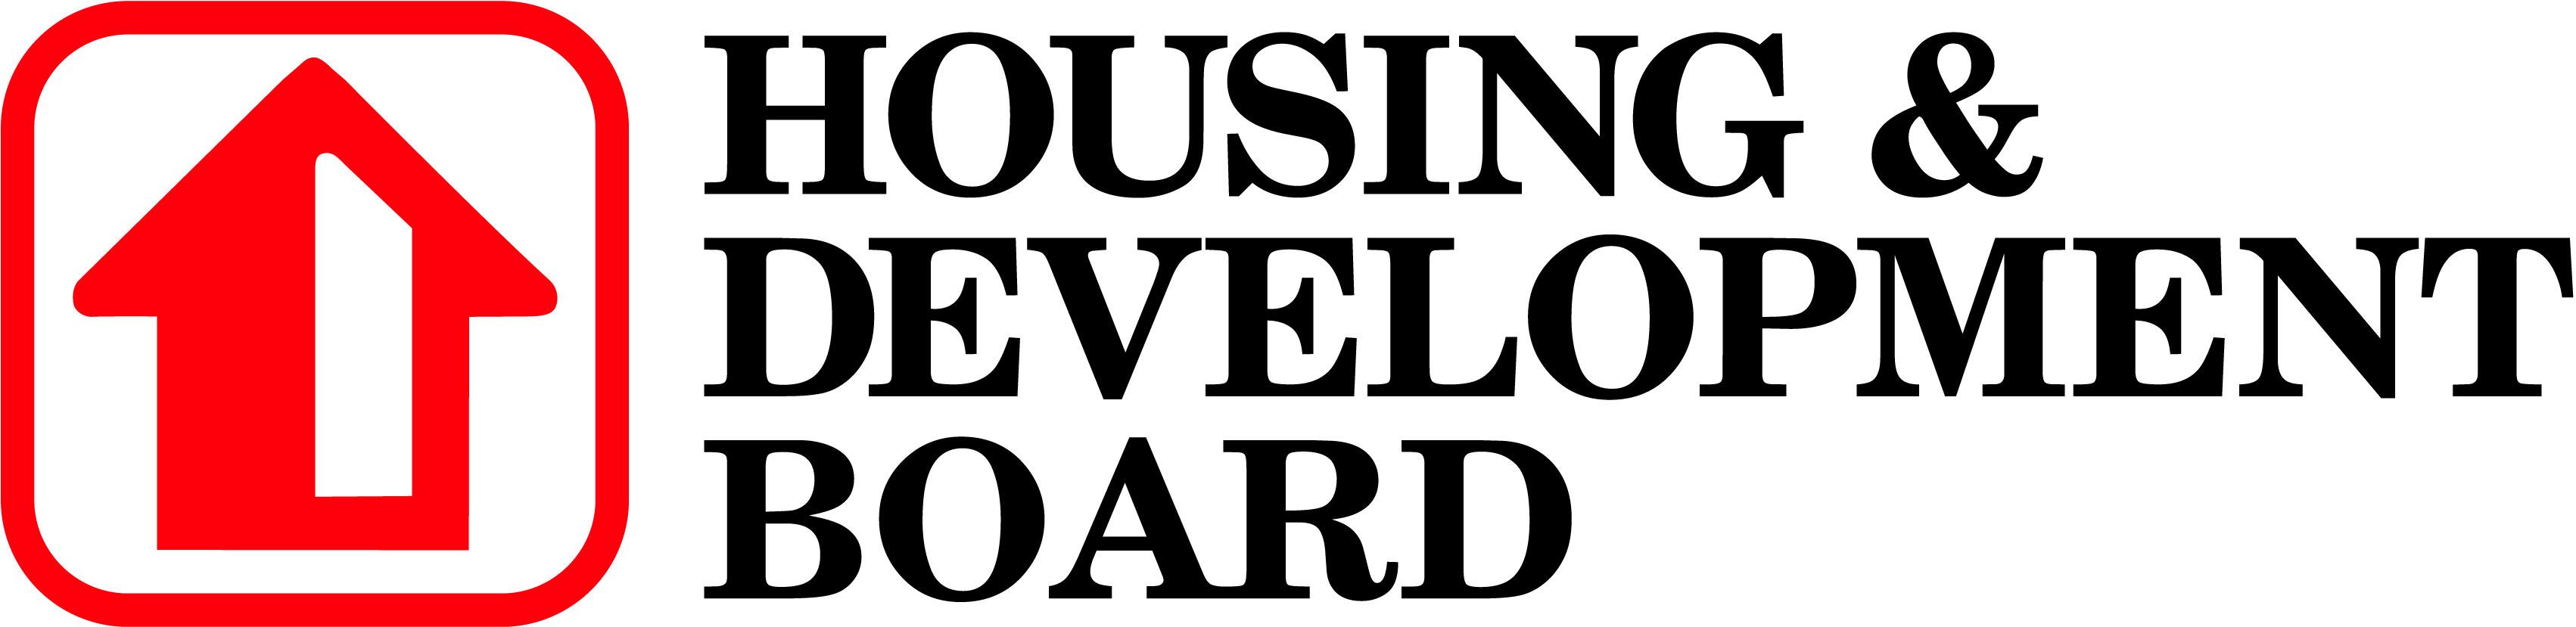 HDB-logo